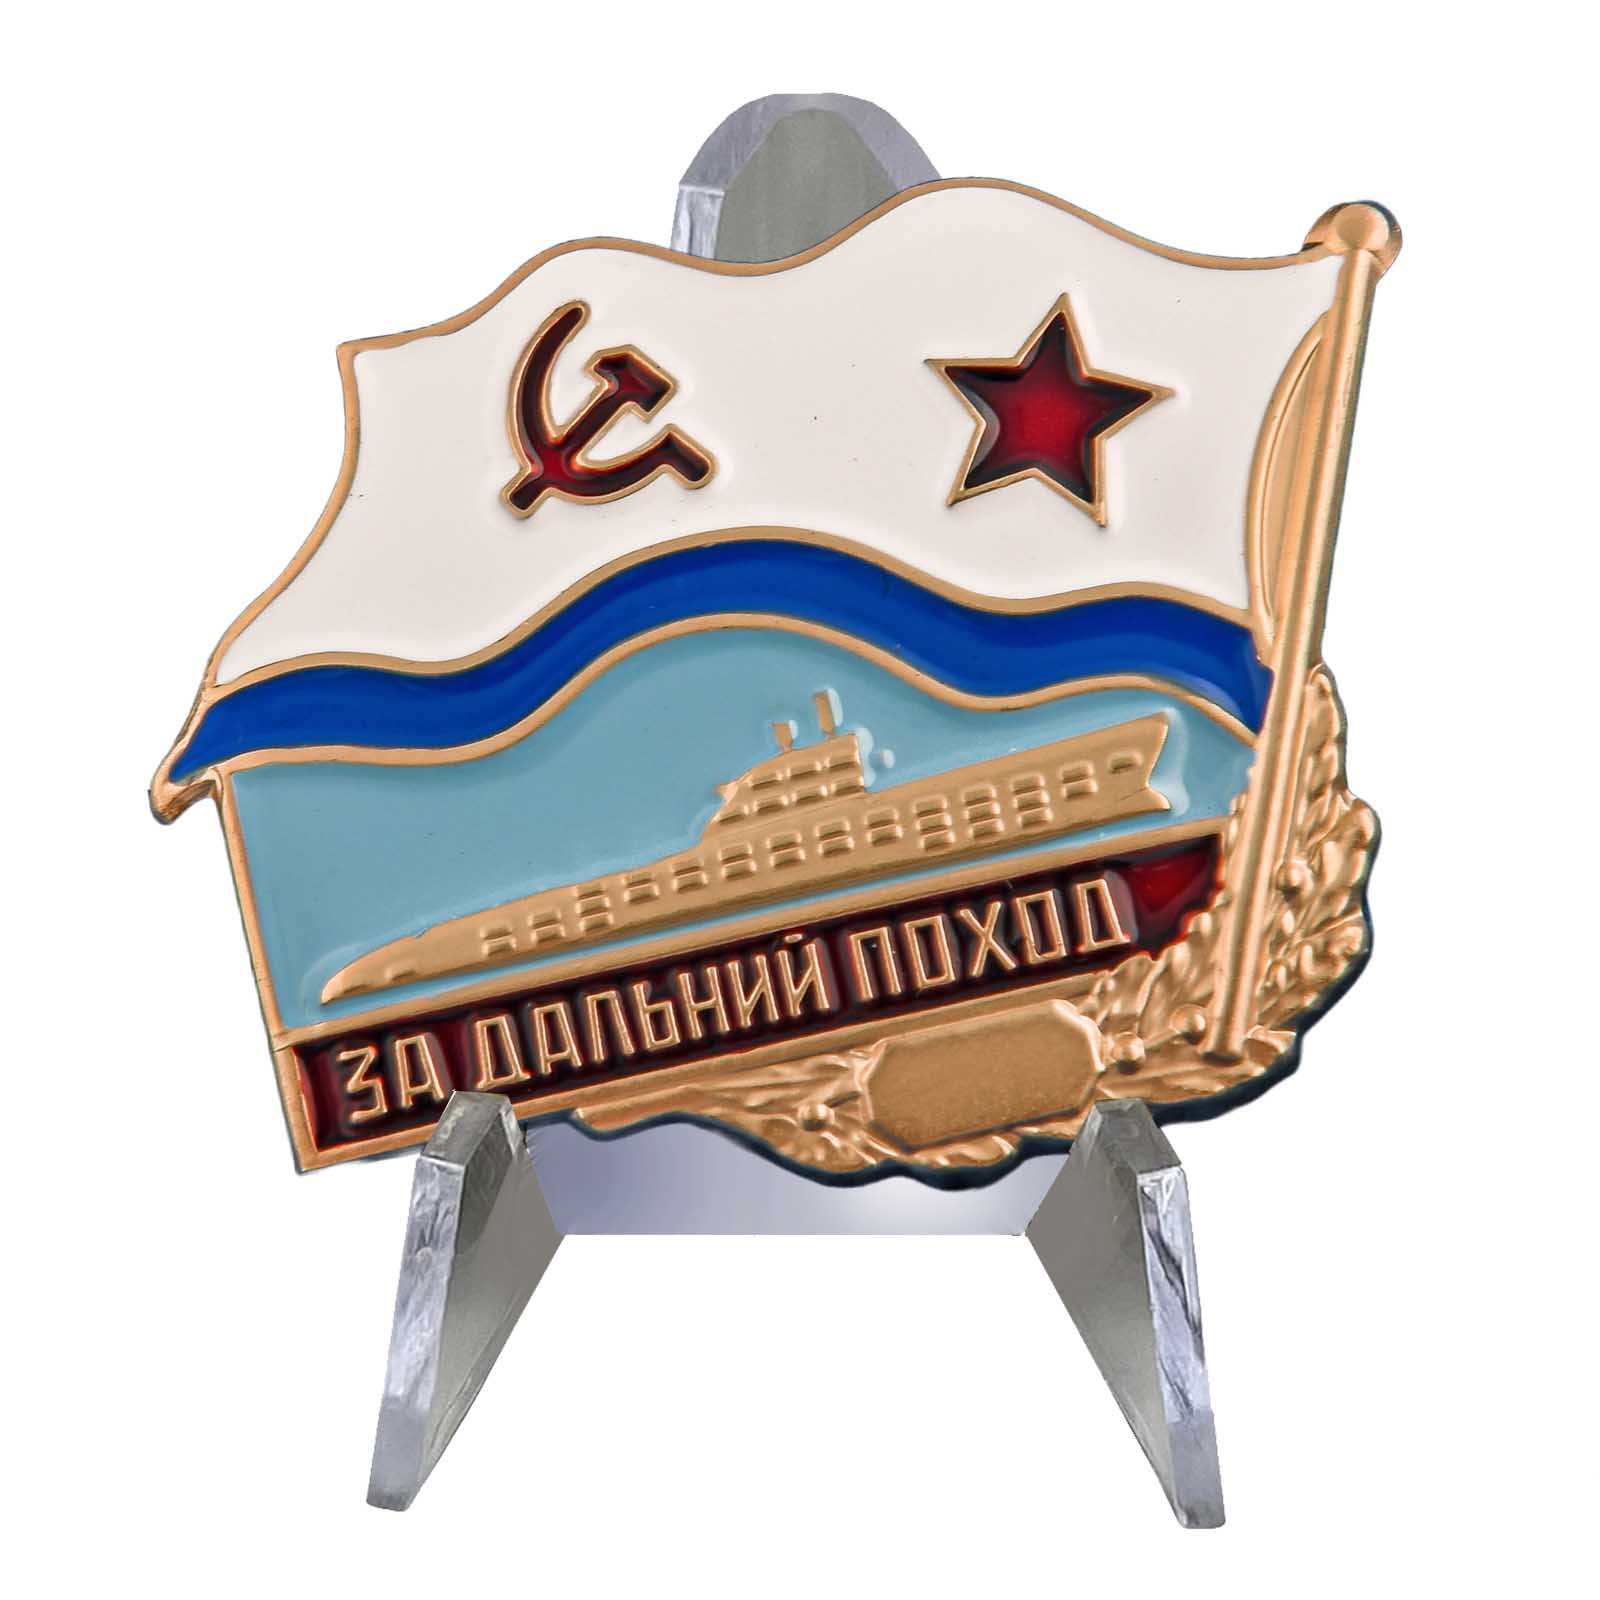 Знак "За дальний поход" ВМФ СССР на подставке